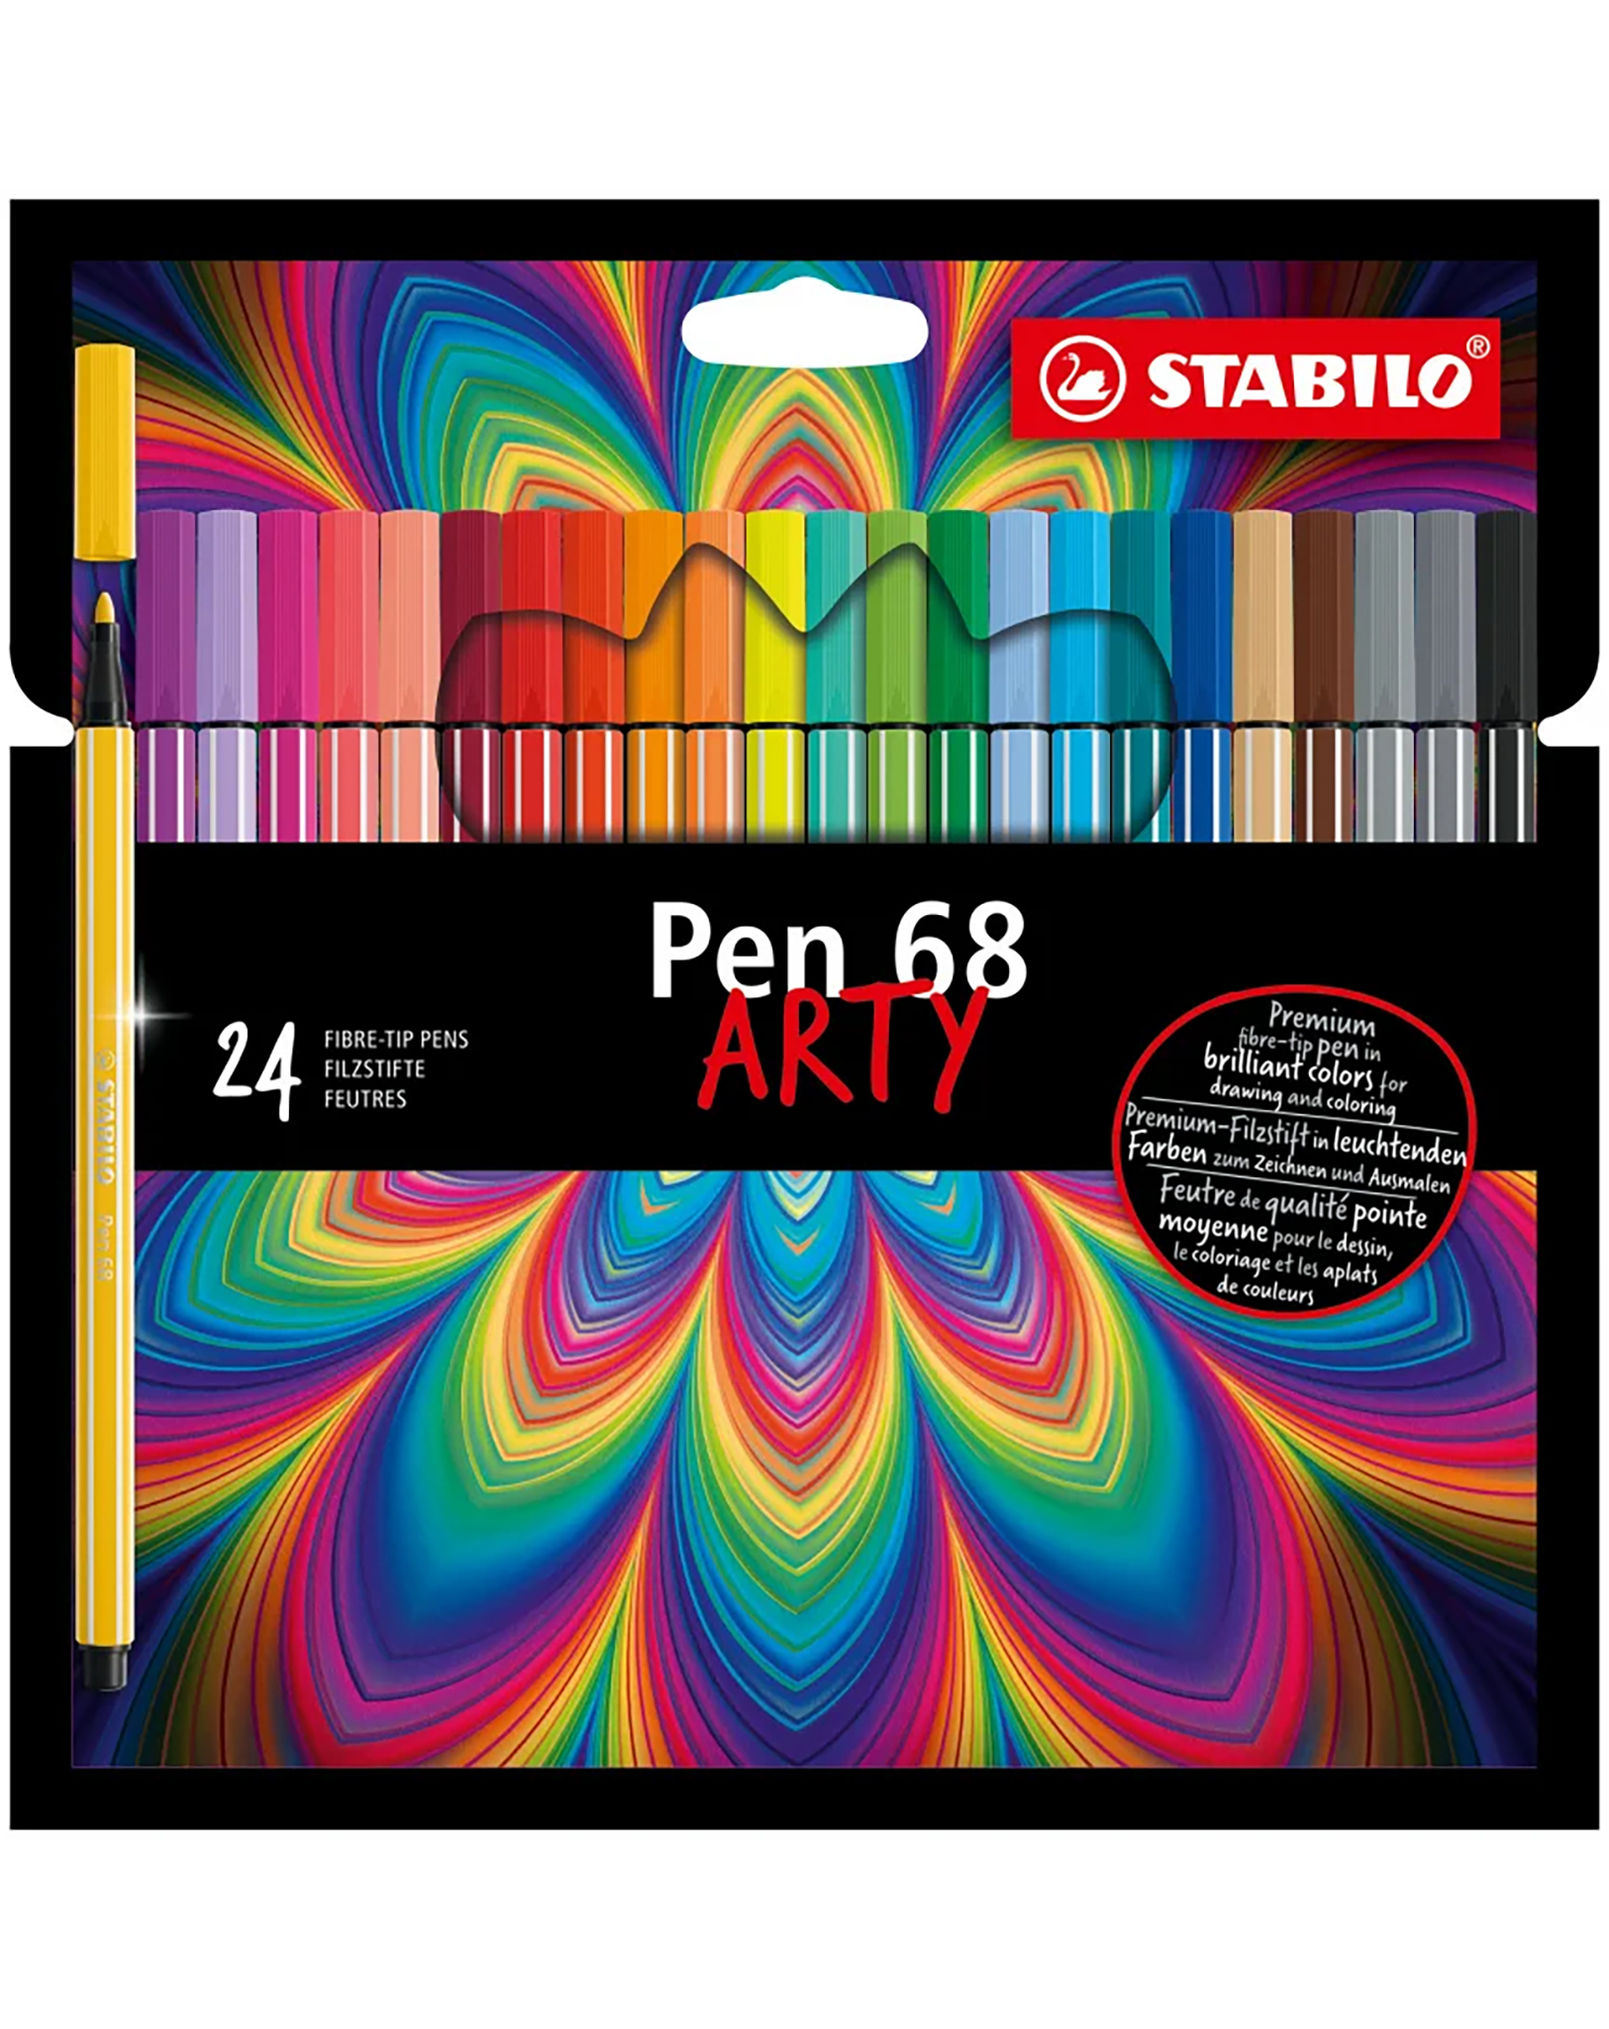 Filzstift STABILO® Pen 68 ARTY 24er-Pack kaufen | tausendkind.de